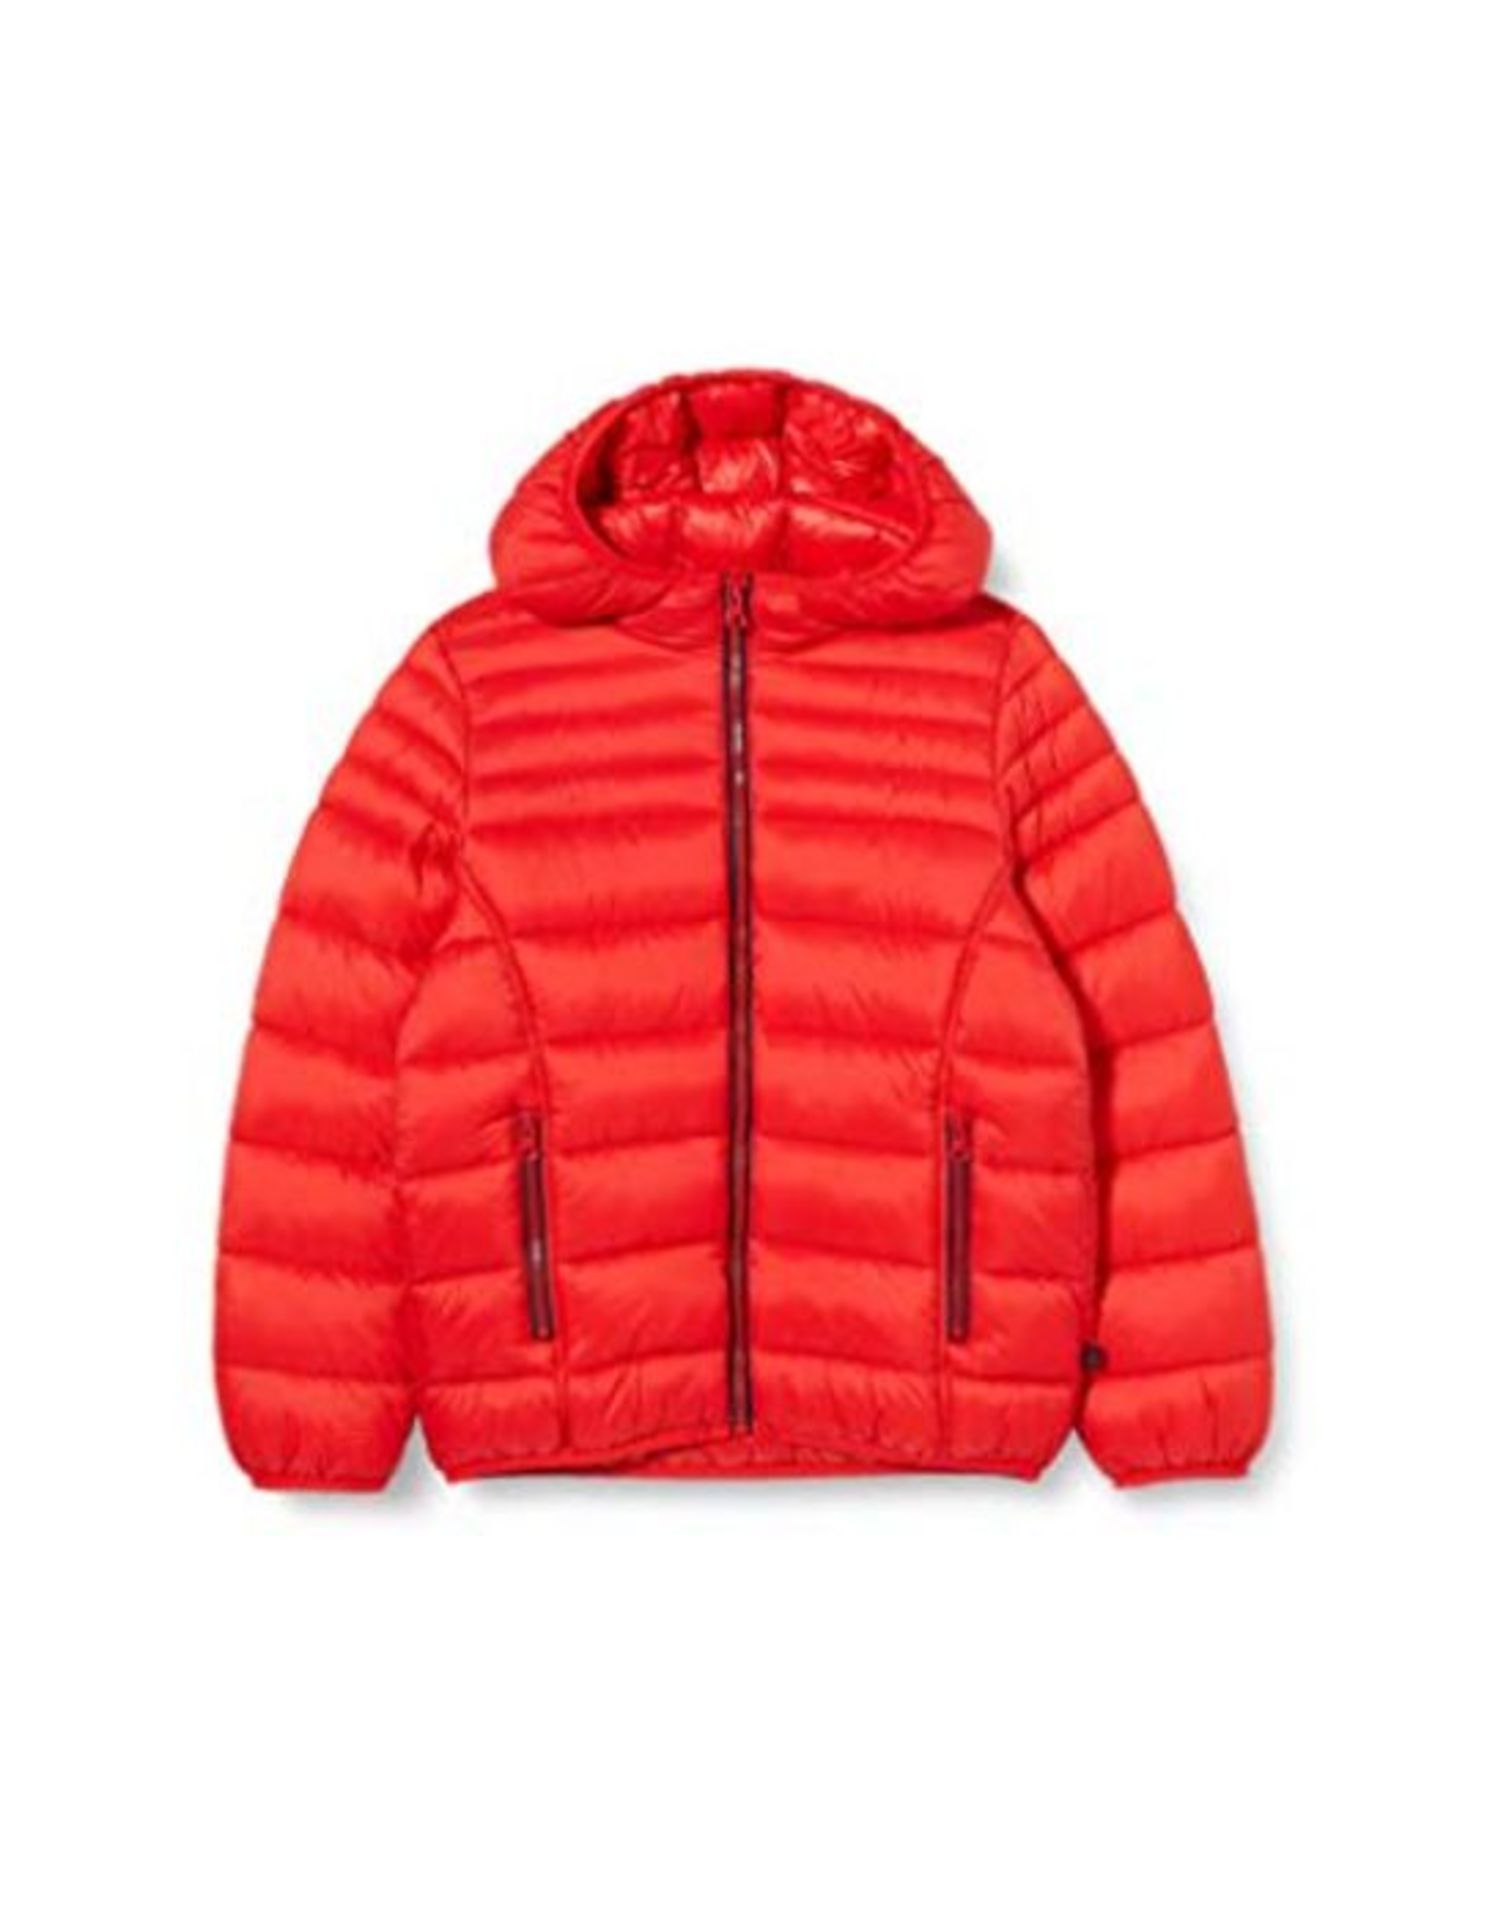 United Colors of Benetton (Z6ERJ) Boy's Giubbotto Jacket, Red 015, L